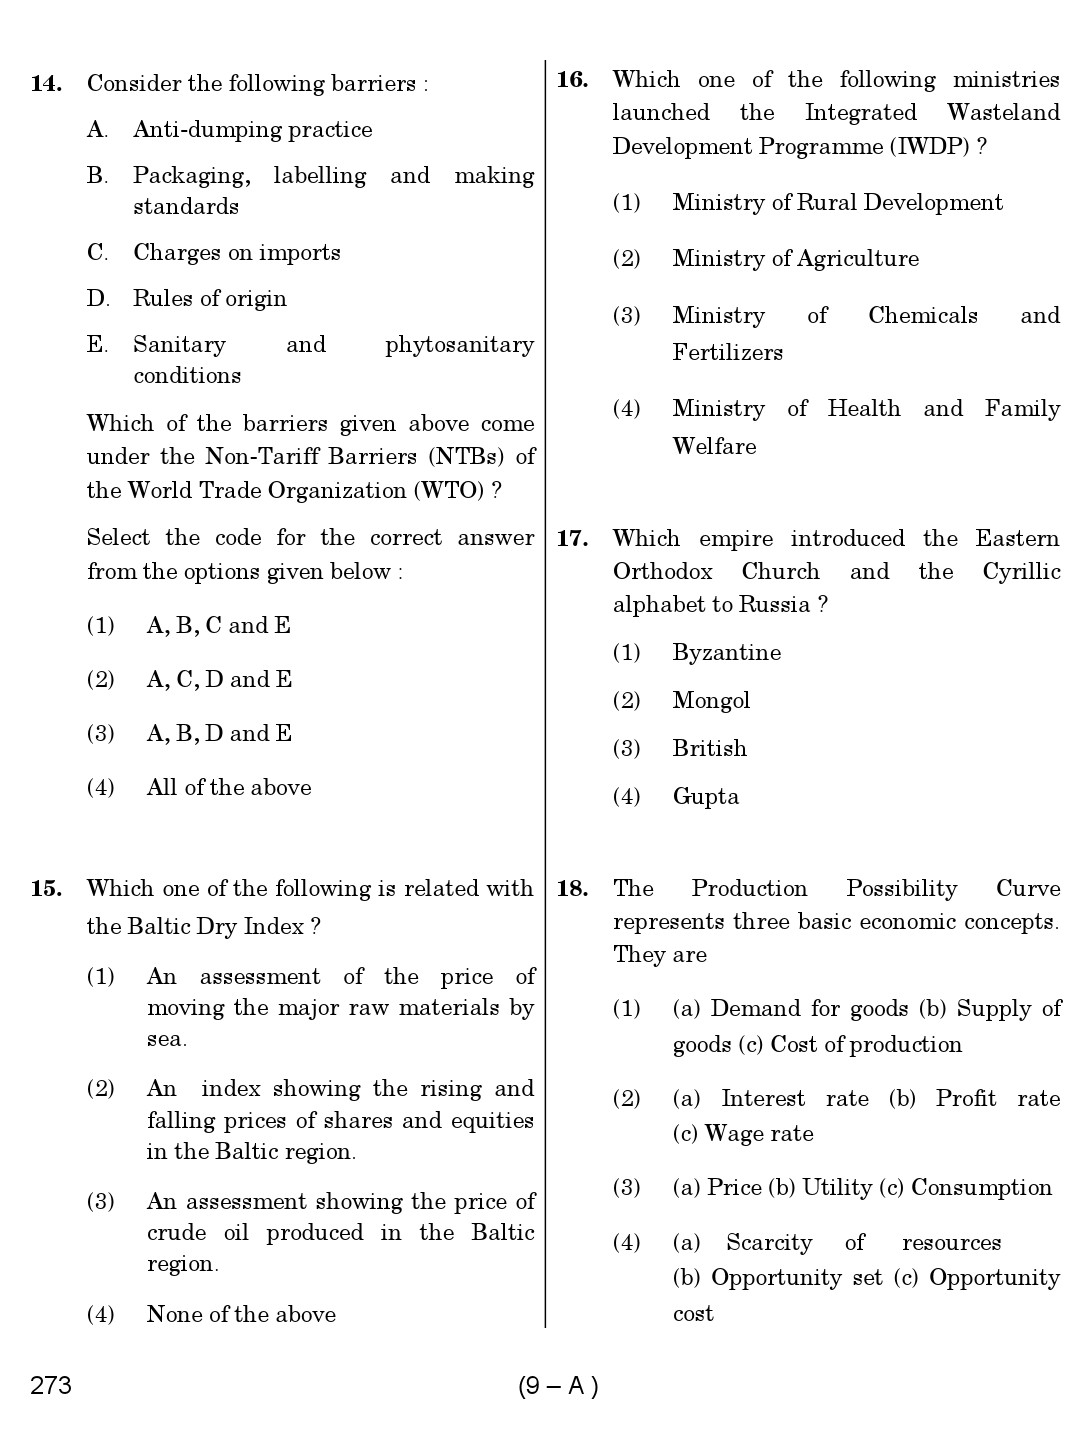 Karnataka PSC Social Science Teacher Exam Sample Question Paper Subject code 273 9